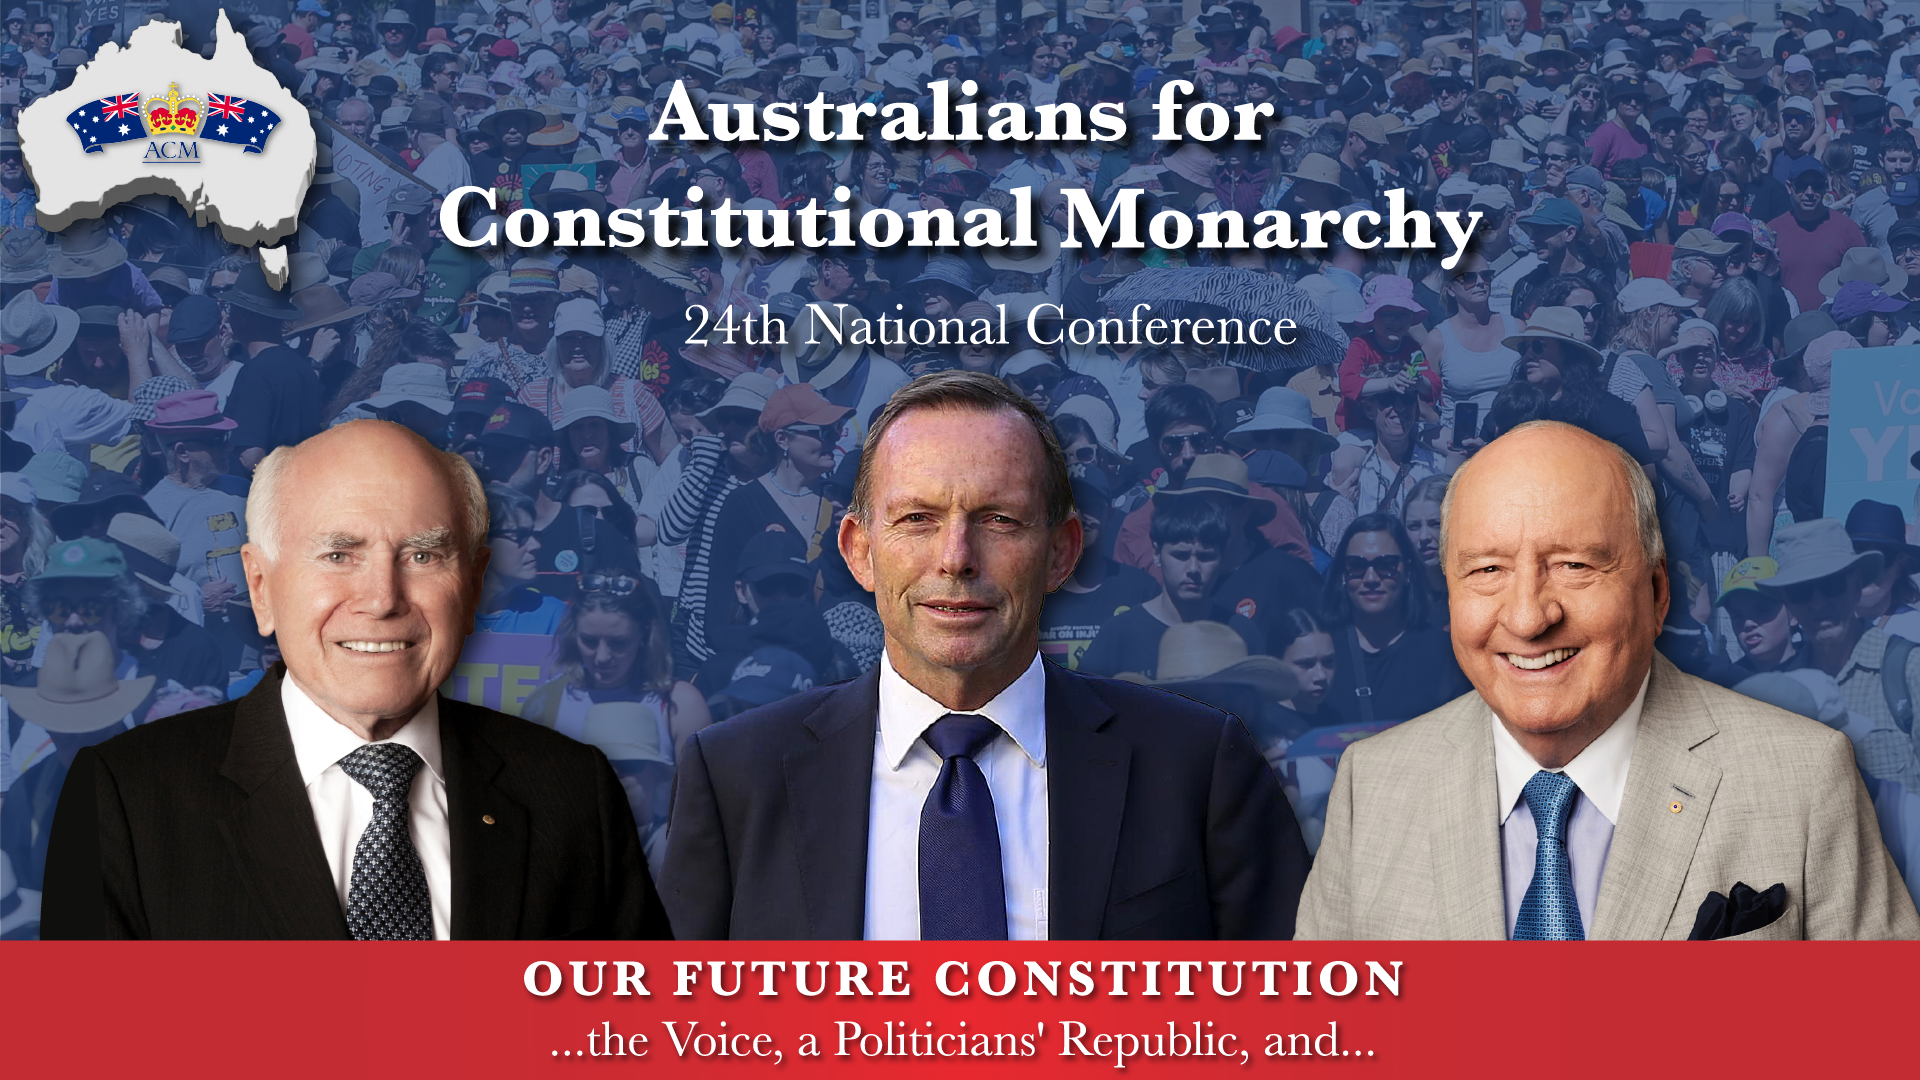 Australians for Constitutional Monarchy